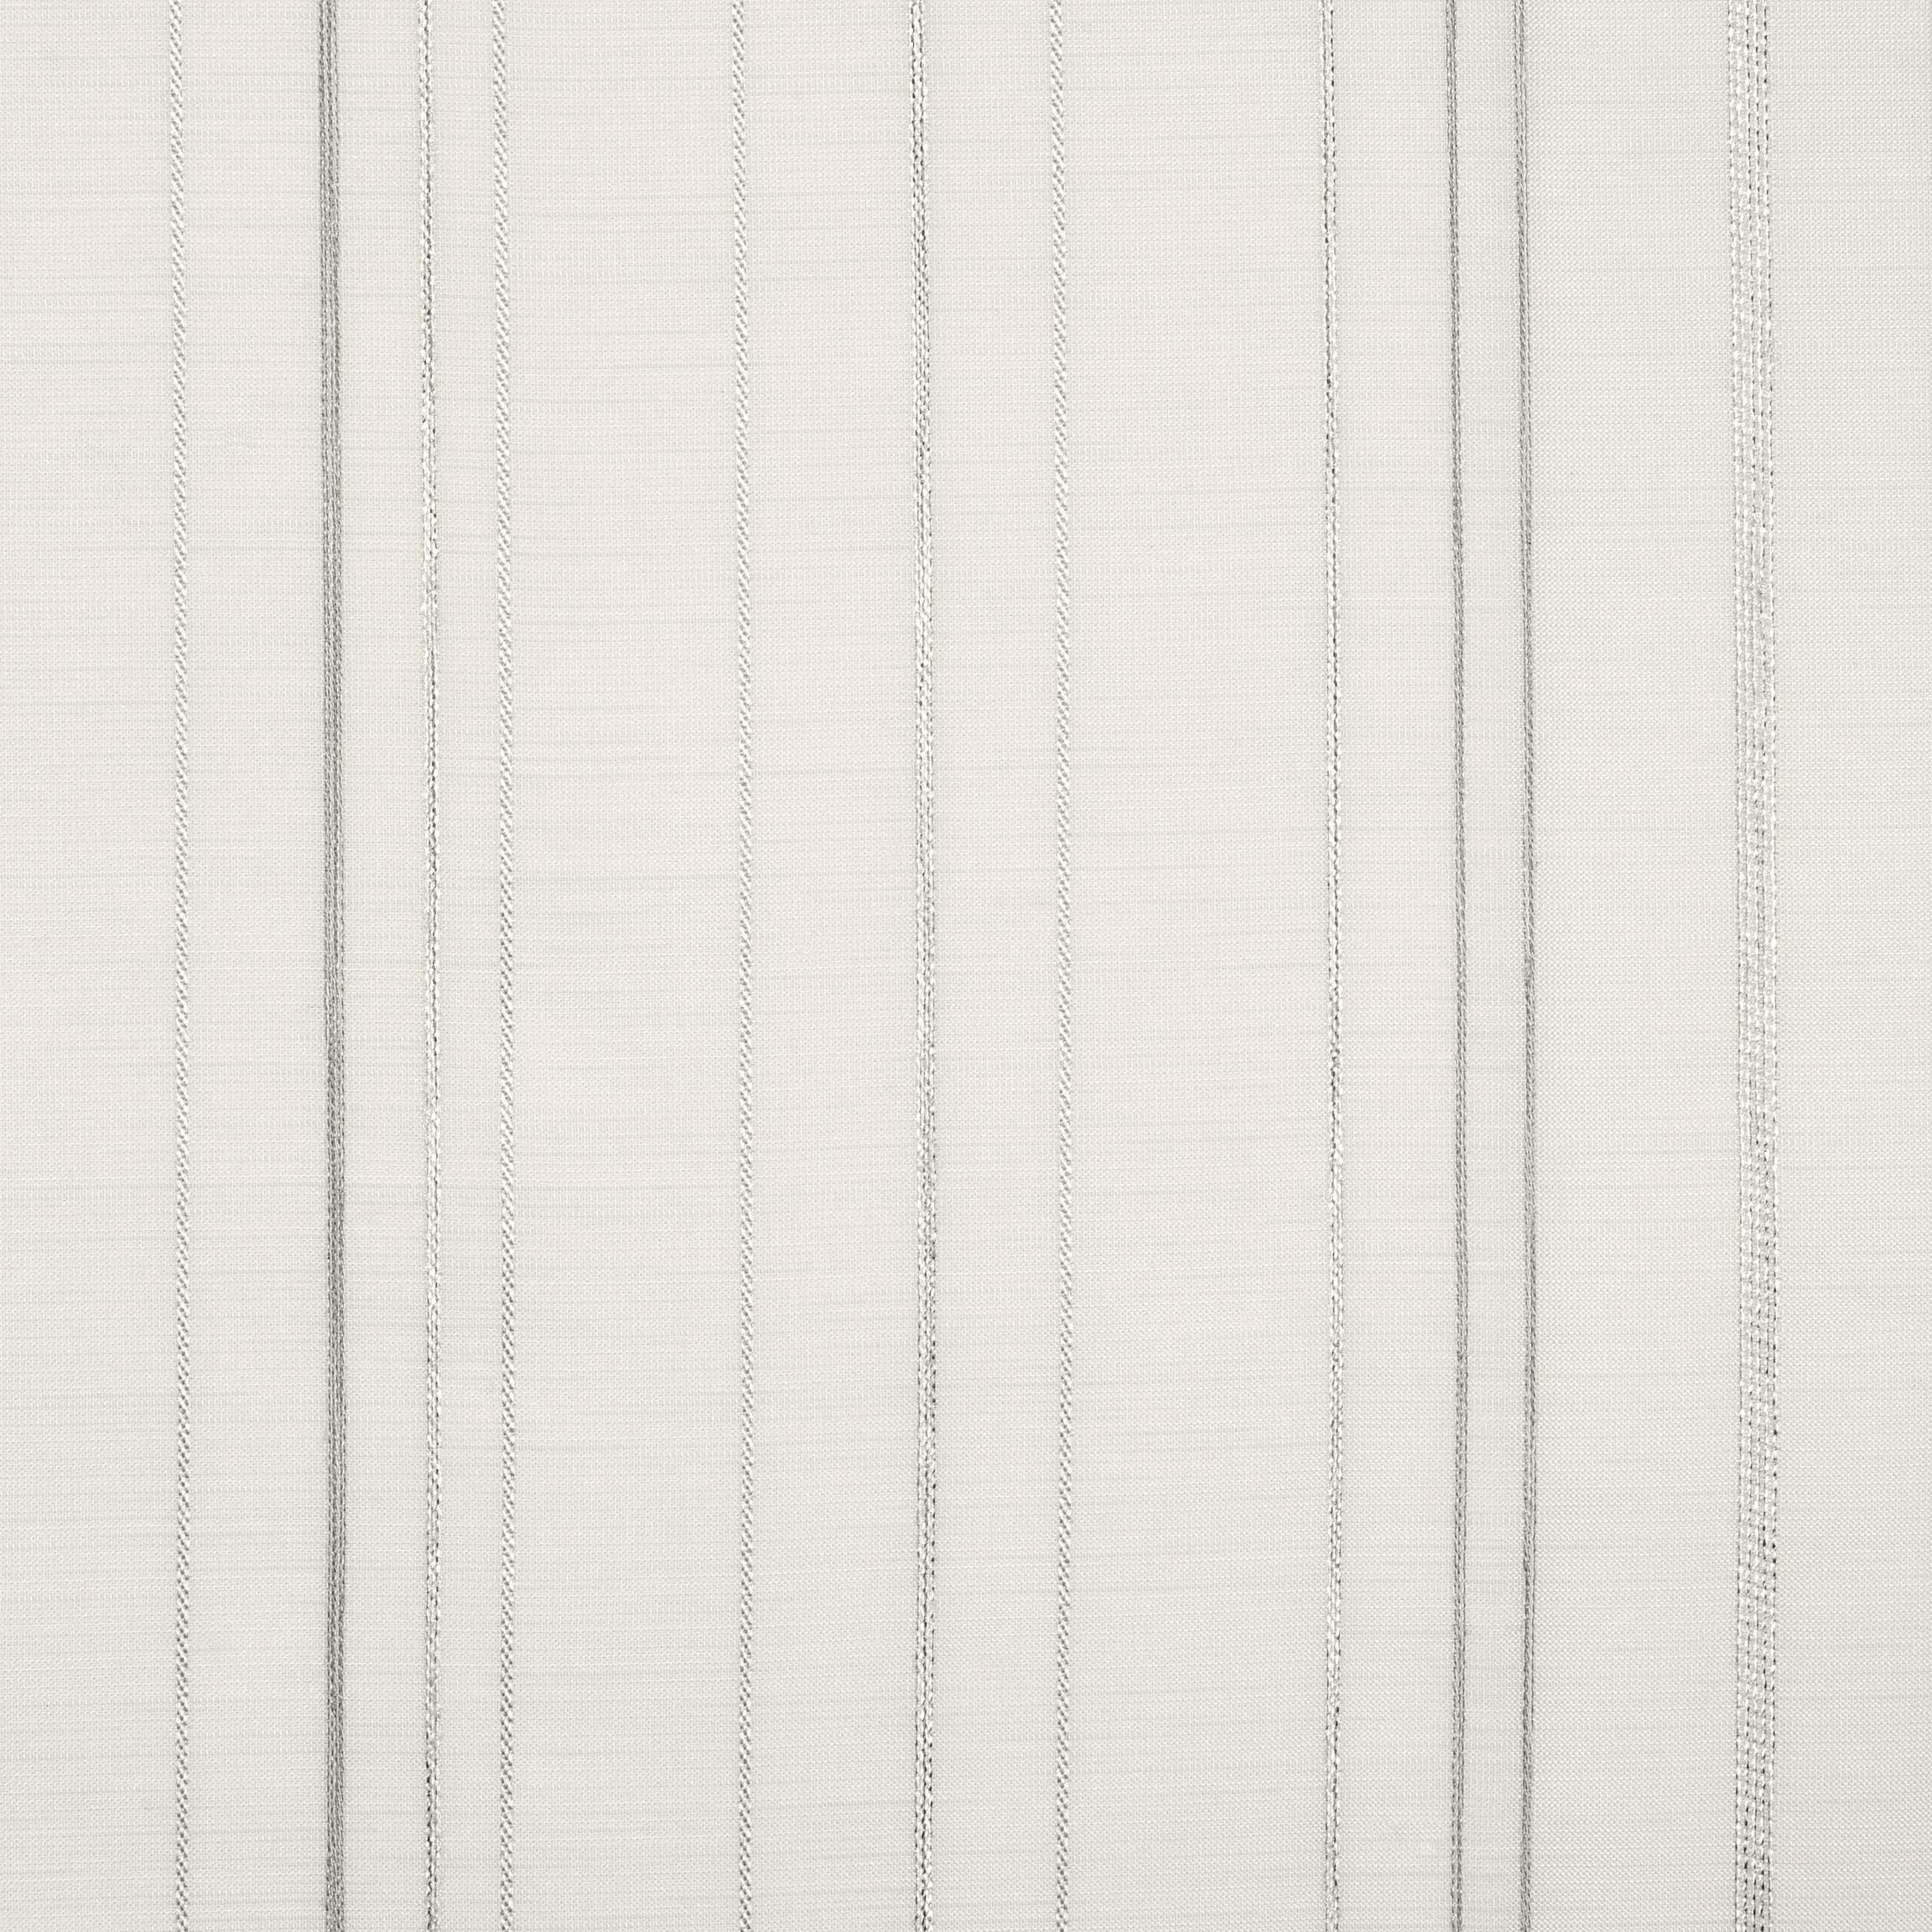  Тюль SKYLINE GREY, ширина 295 см  - Фото